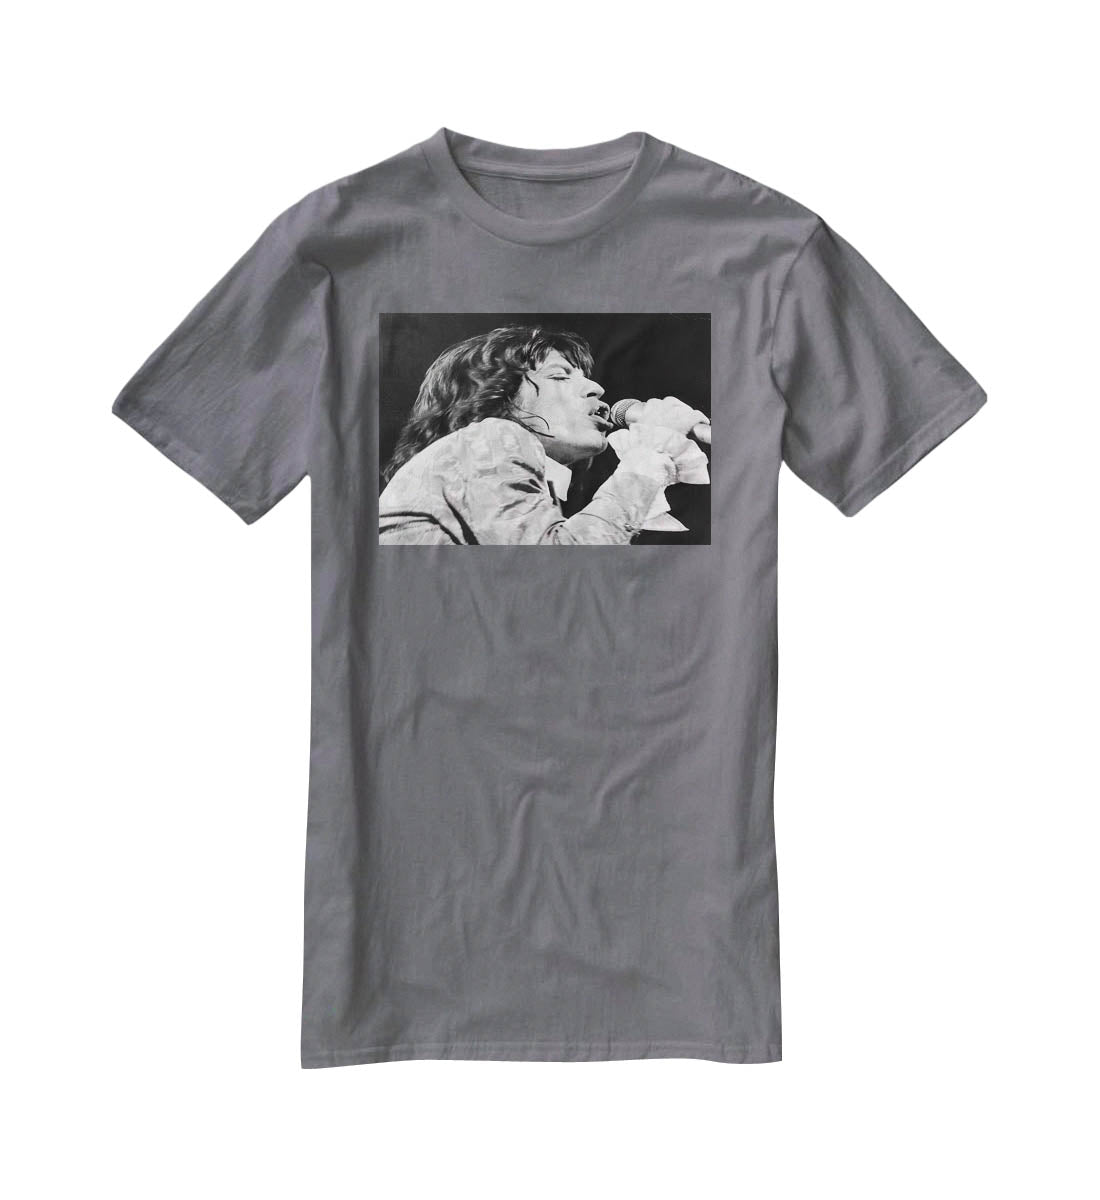 Mick Jagger belts it out T-Shirt - Canvas Art Rocks - 3